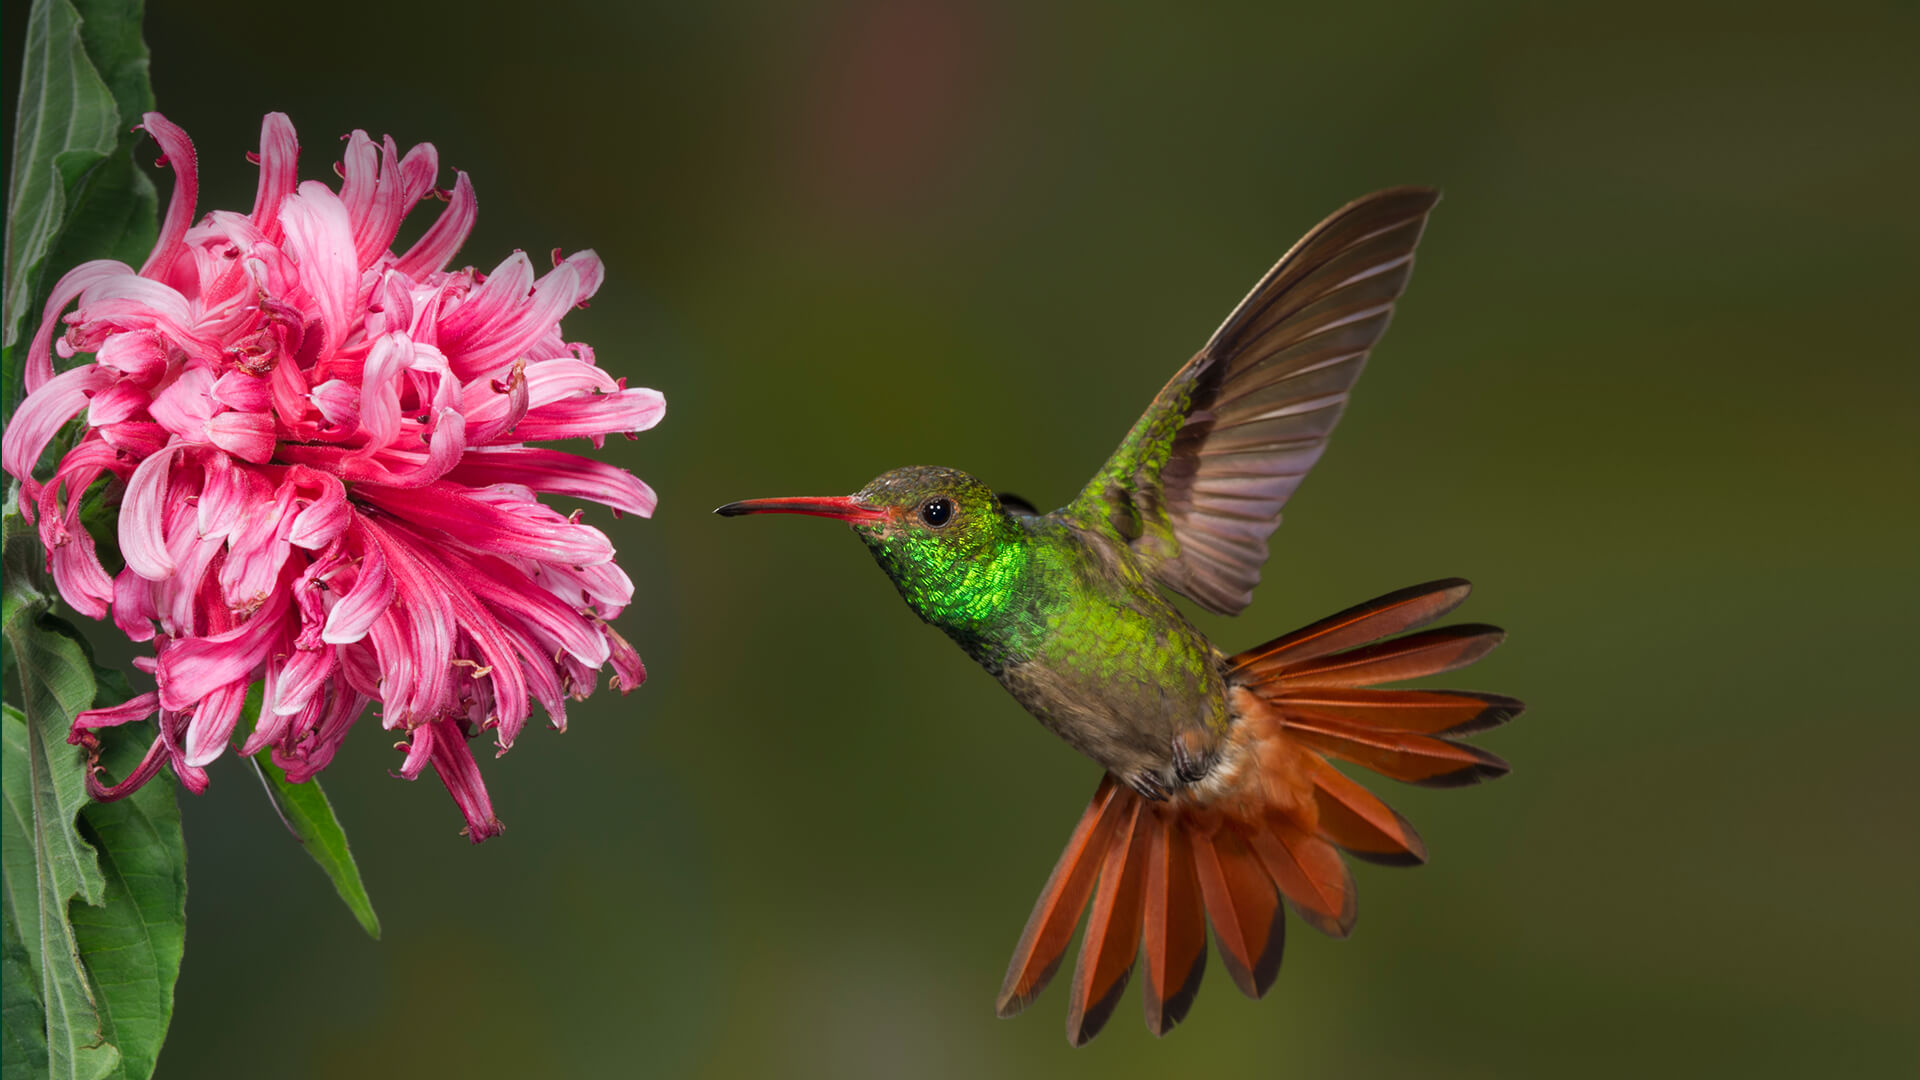 Costa Rican hummingbird